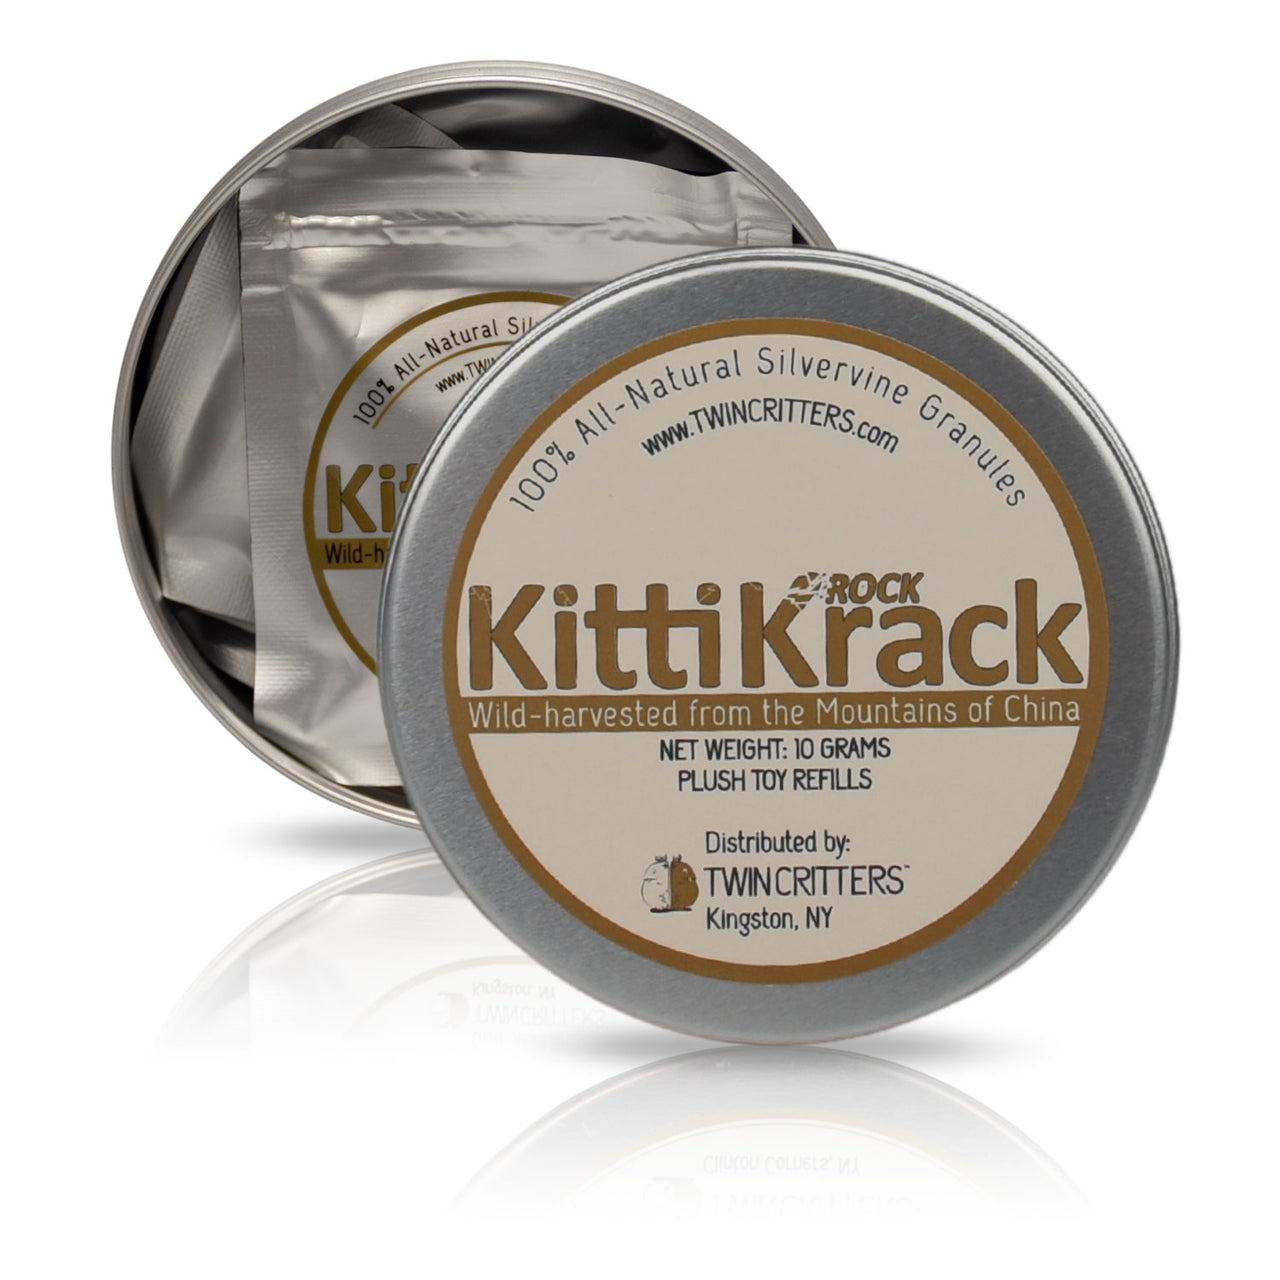 KittiKrack Rock Plush Toy Refills - Organic Silvervine Granules